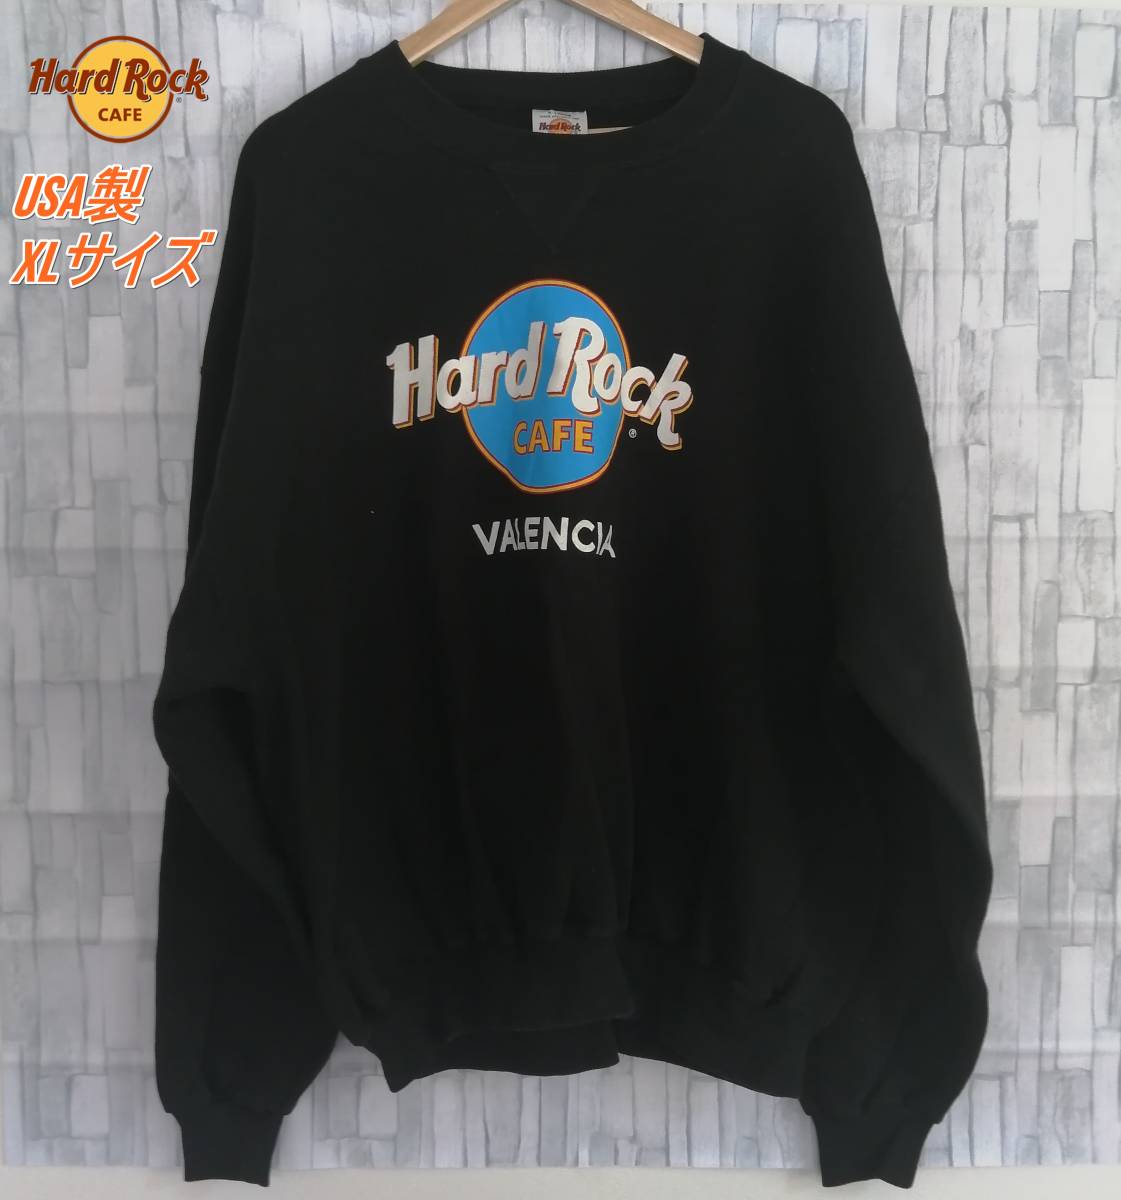 Hard Rock Cafe ハードロックカフェ 黒銀 スウェット www.lahza.jp